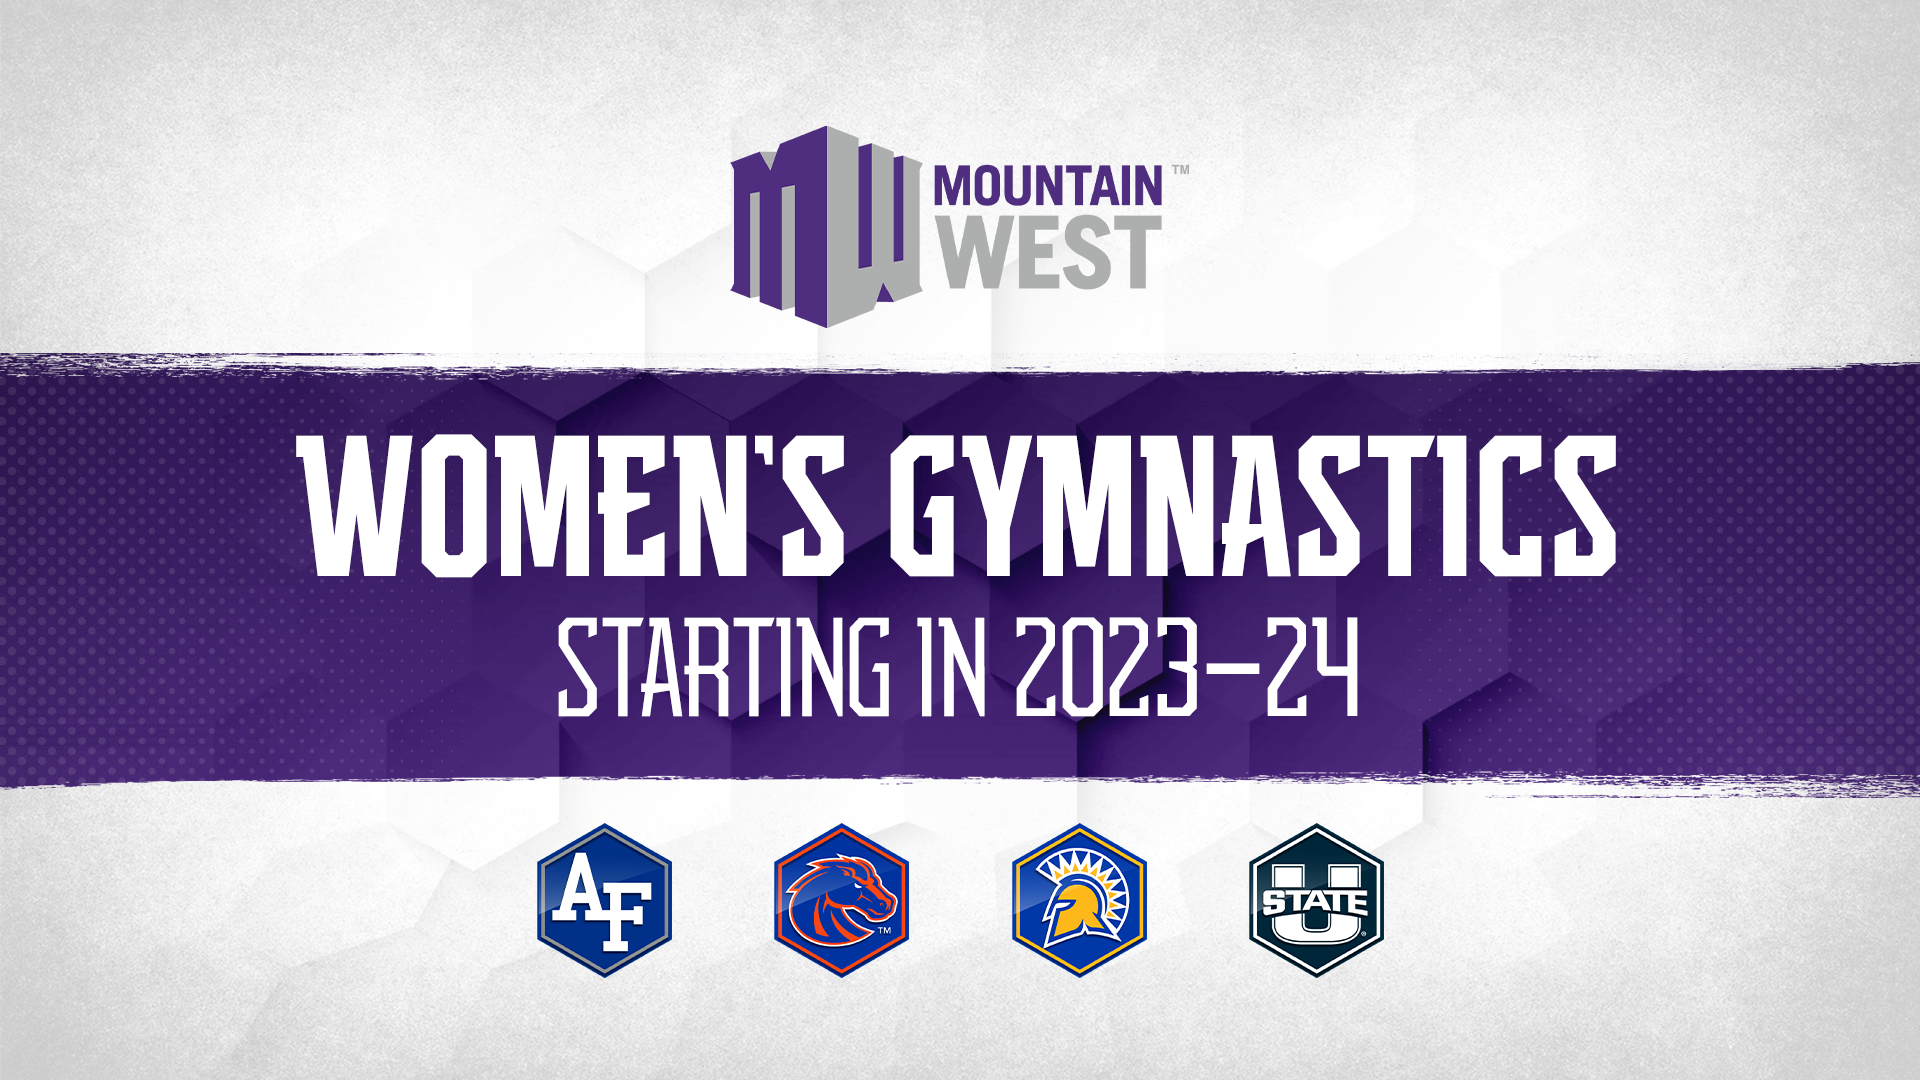 Mountain West Adds Women's Gymnastics in 2023-2024